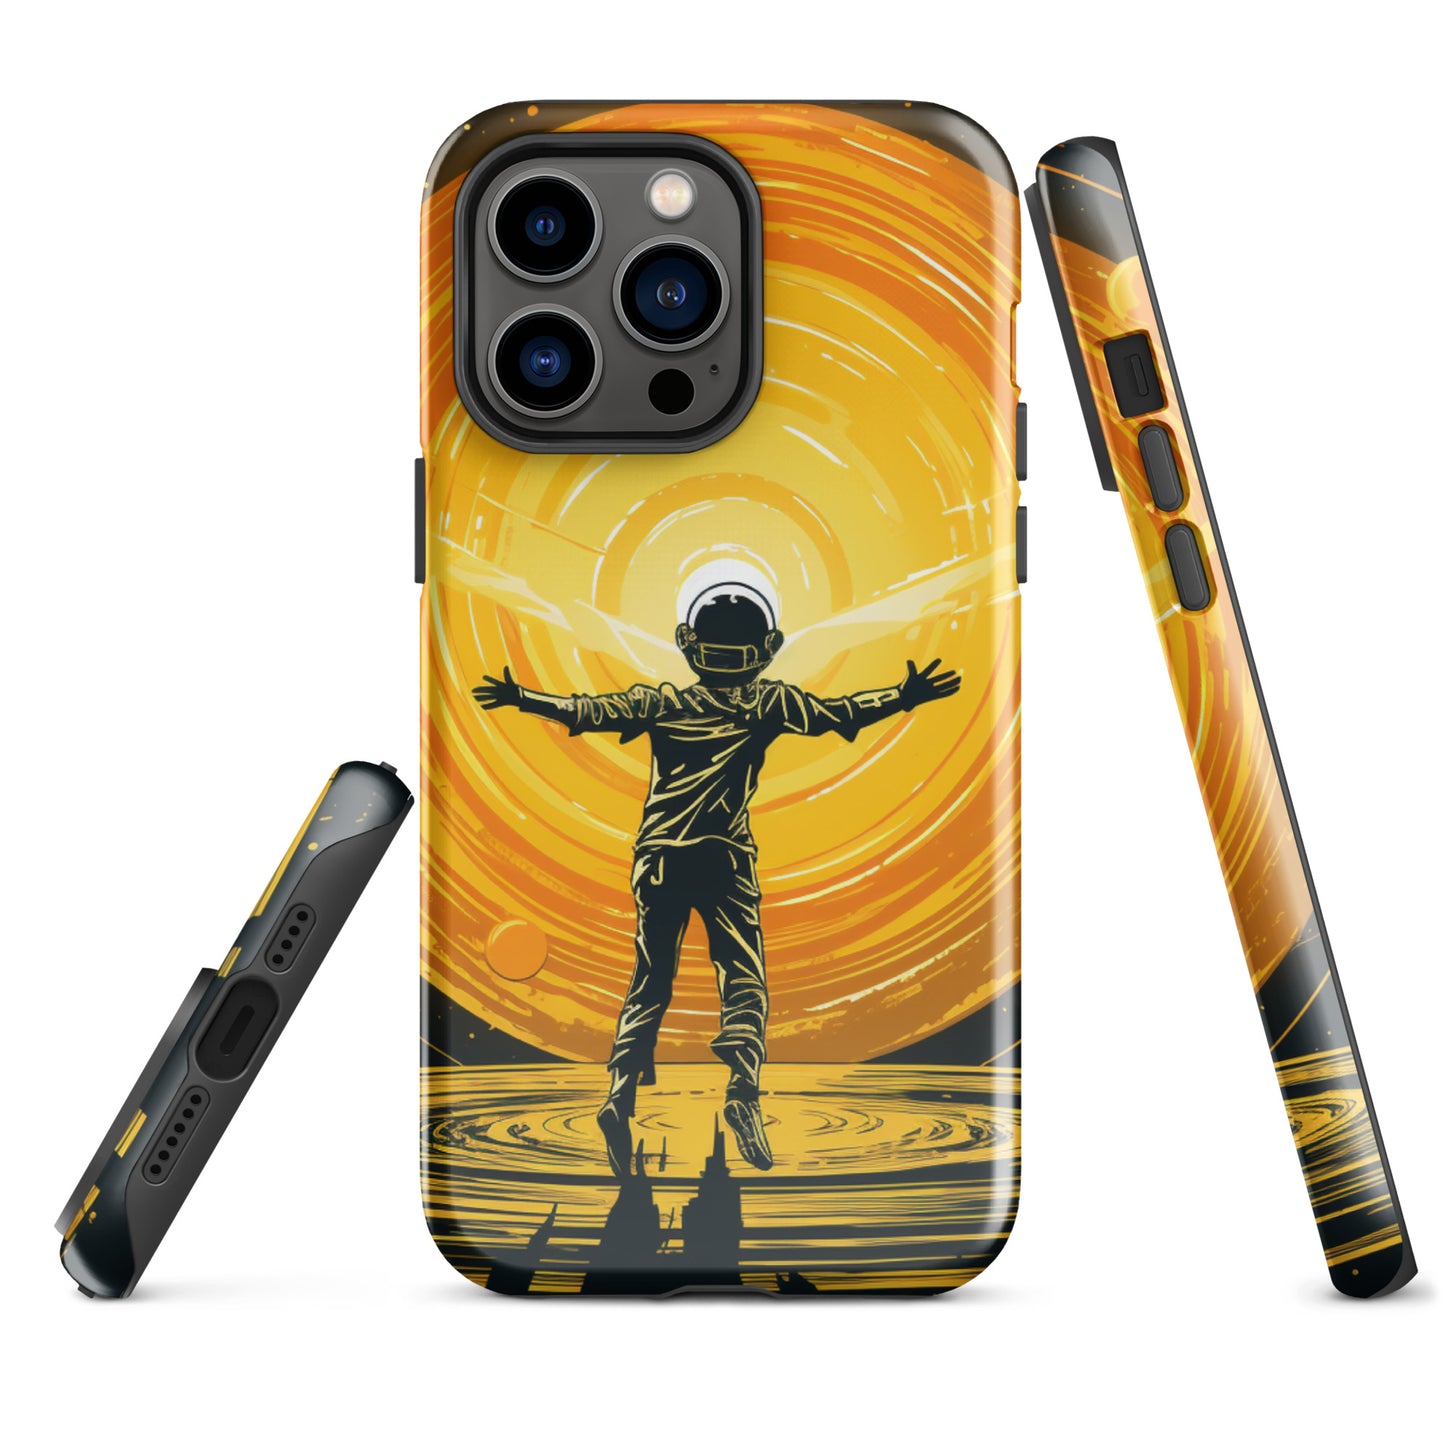 Cosmic 'Spaceman' Durable, Anti-Shock iPhone Case